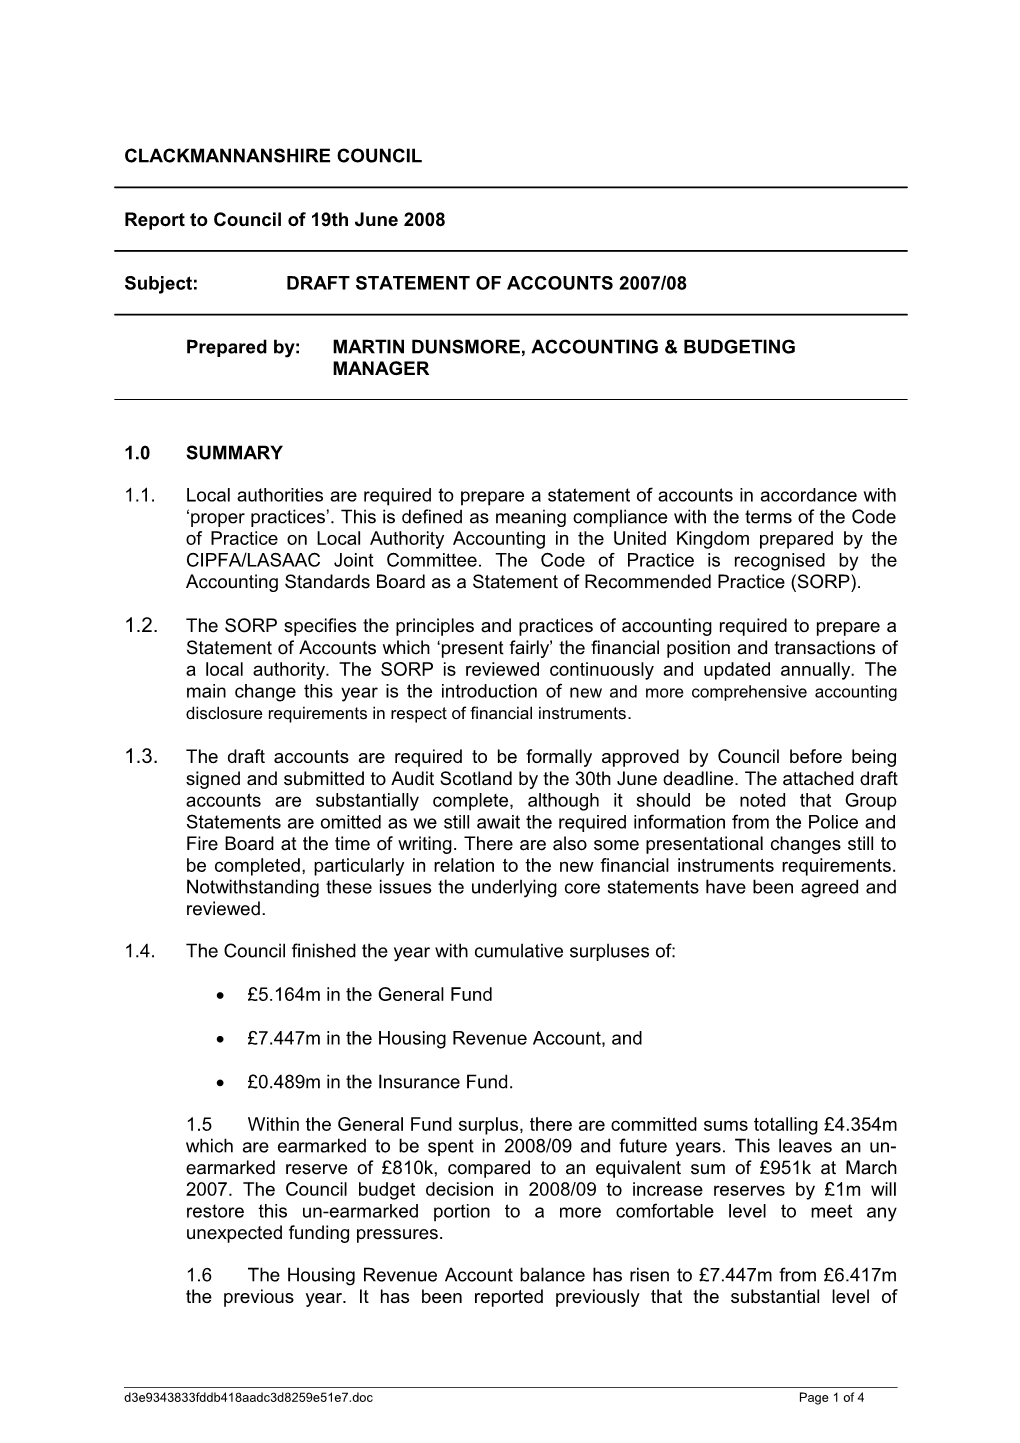 Subject: DRAFT STATEMENT of ACCOUNTS 2007/08